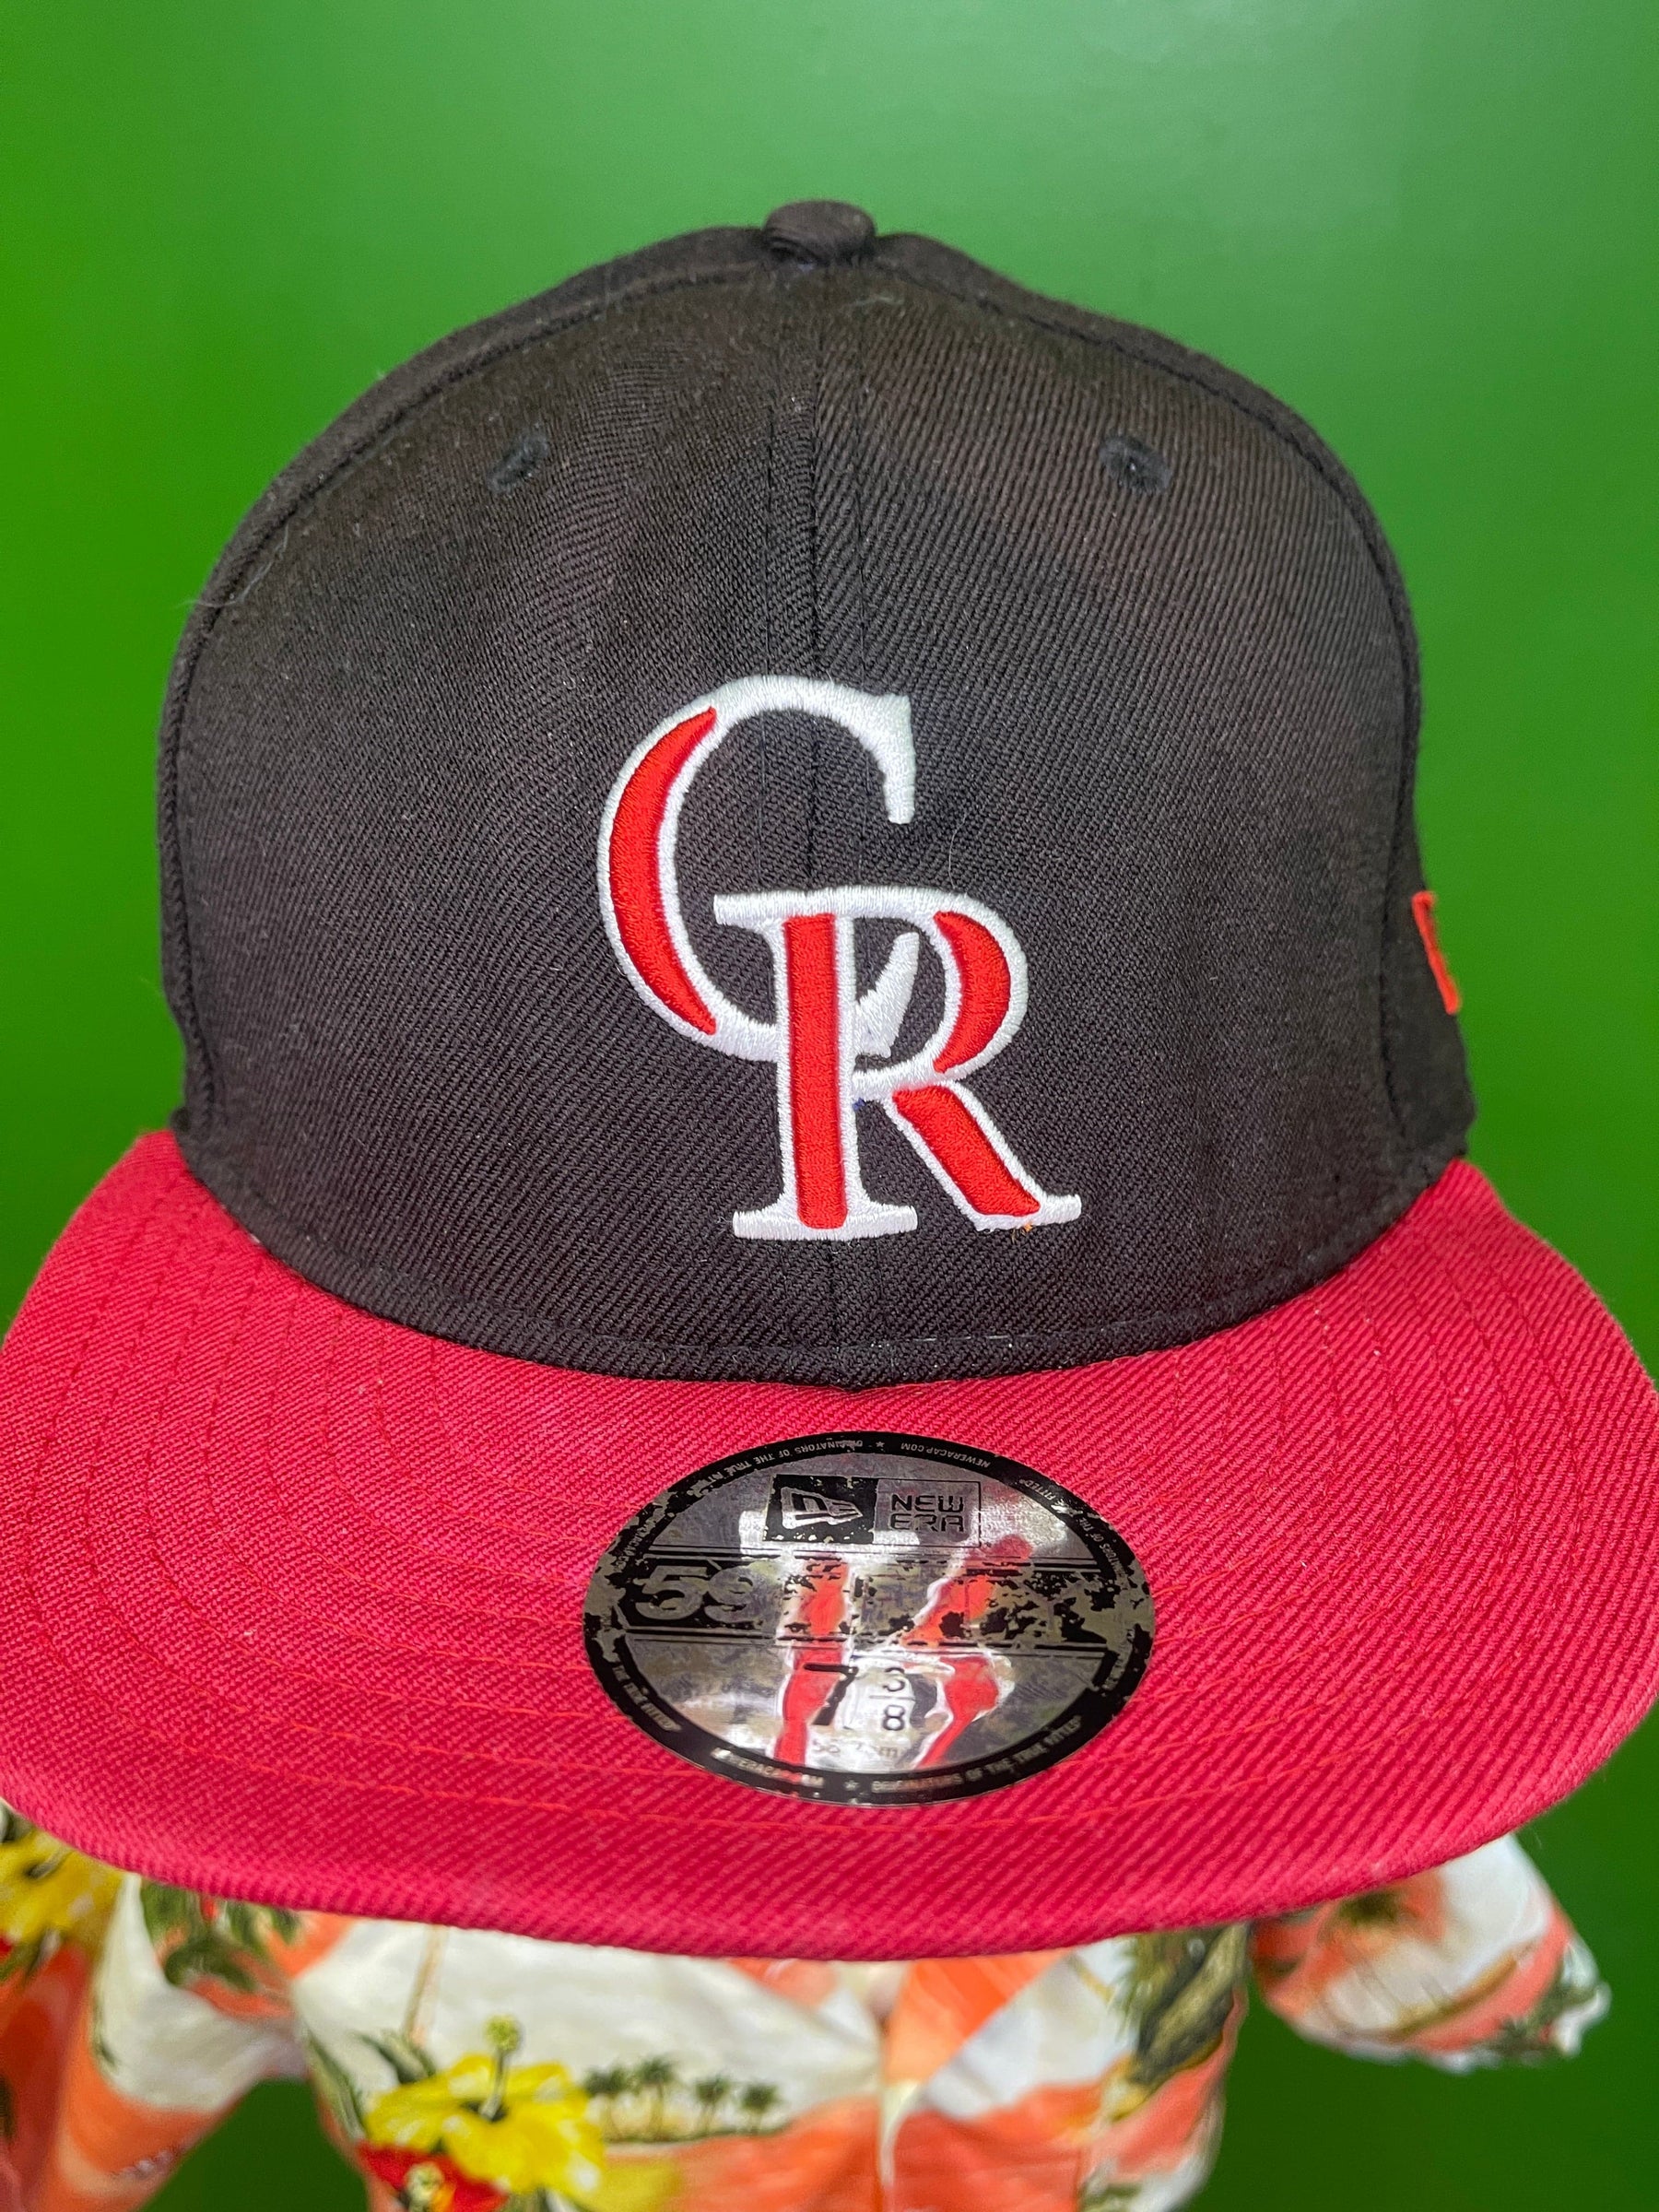 MLB Colorado Rockies New Era 59FIFTY Cap / Hat Size 7-3/8